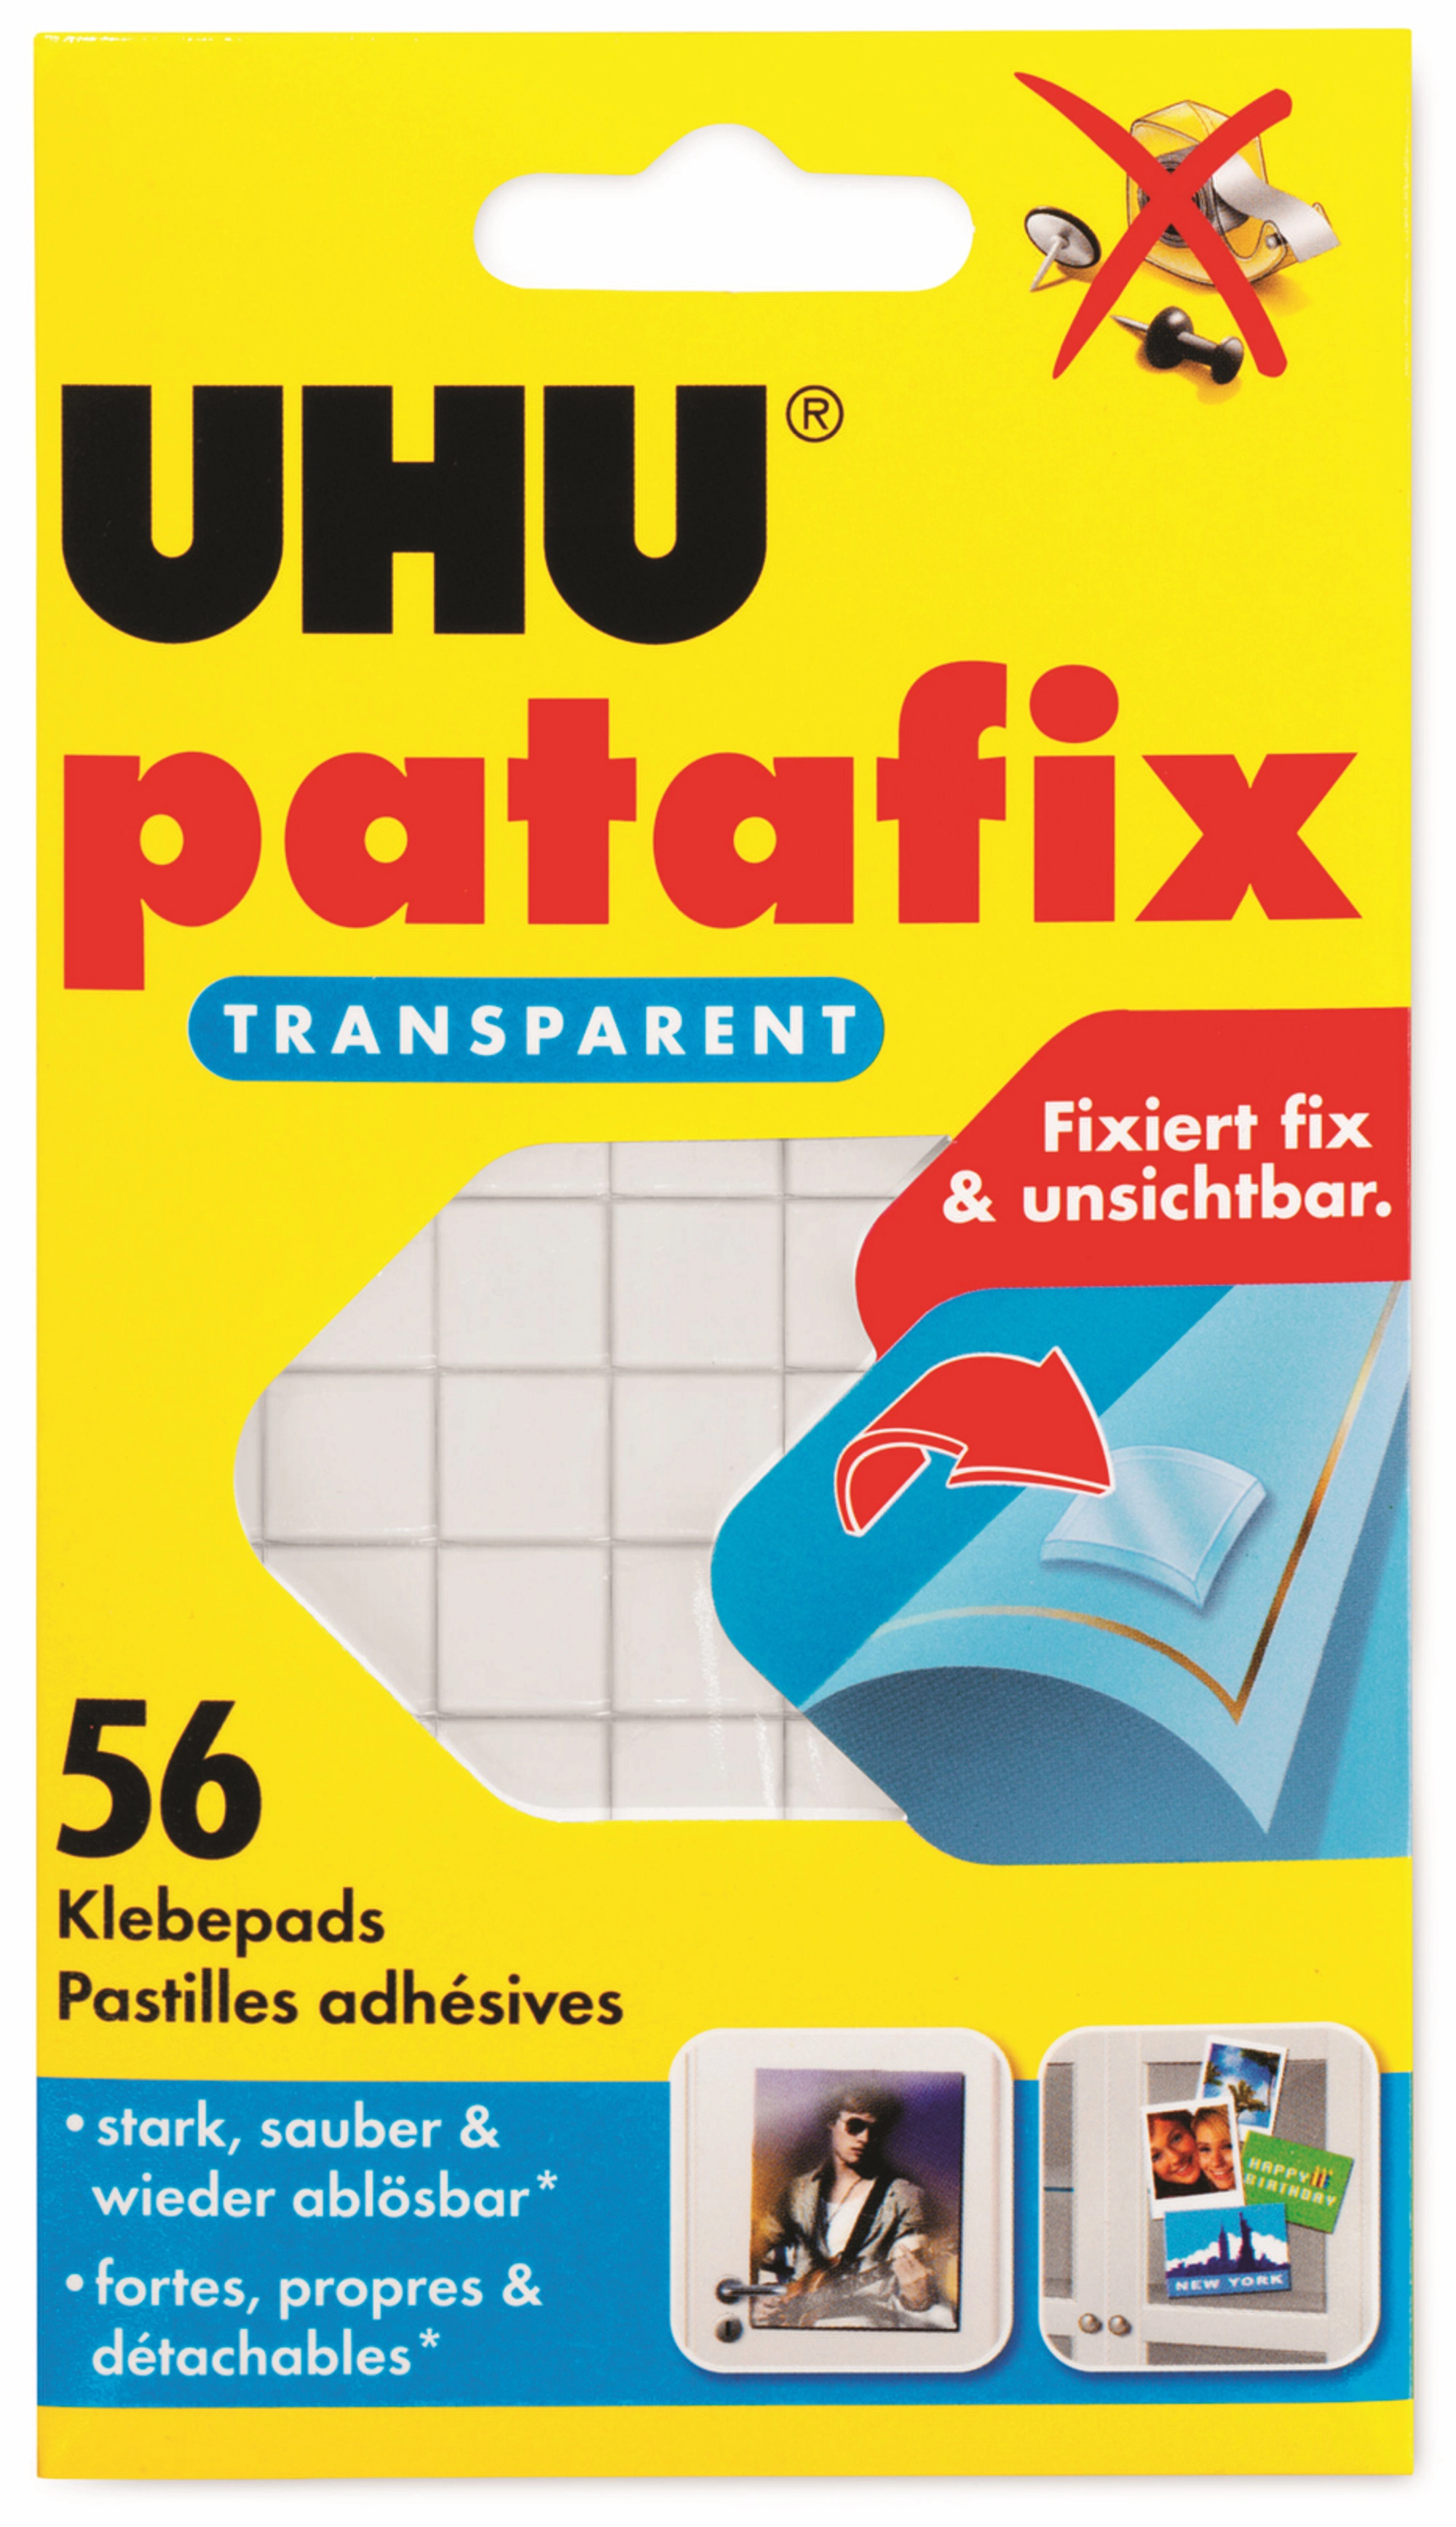 UHU Klebepads patafix Transparent 56 Stk. kaufen bei OBI